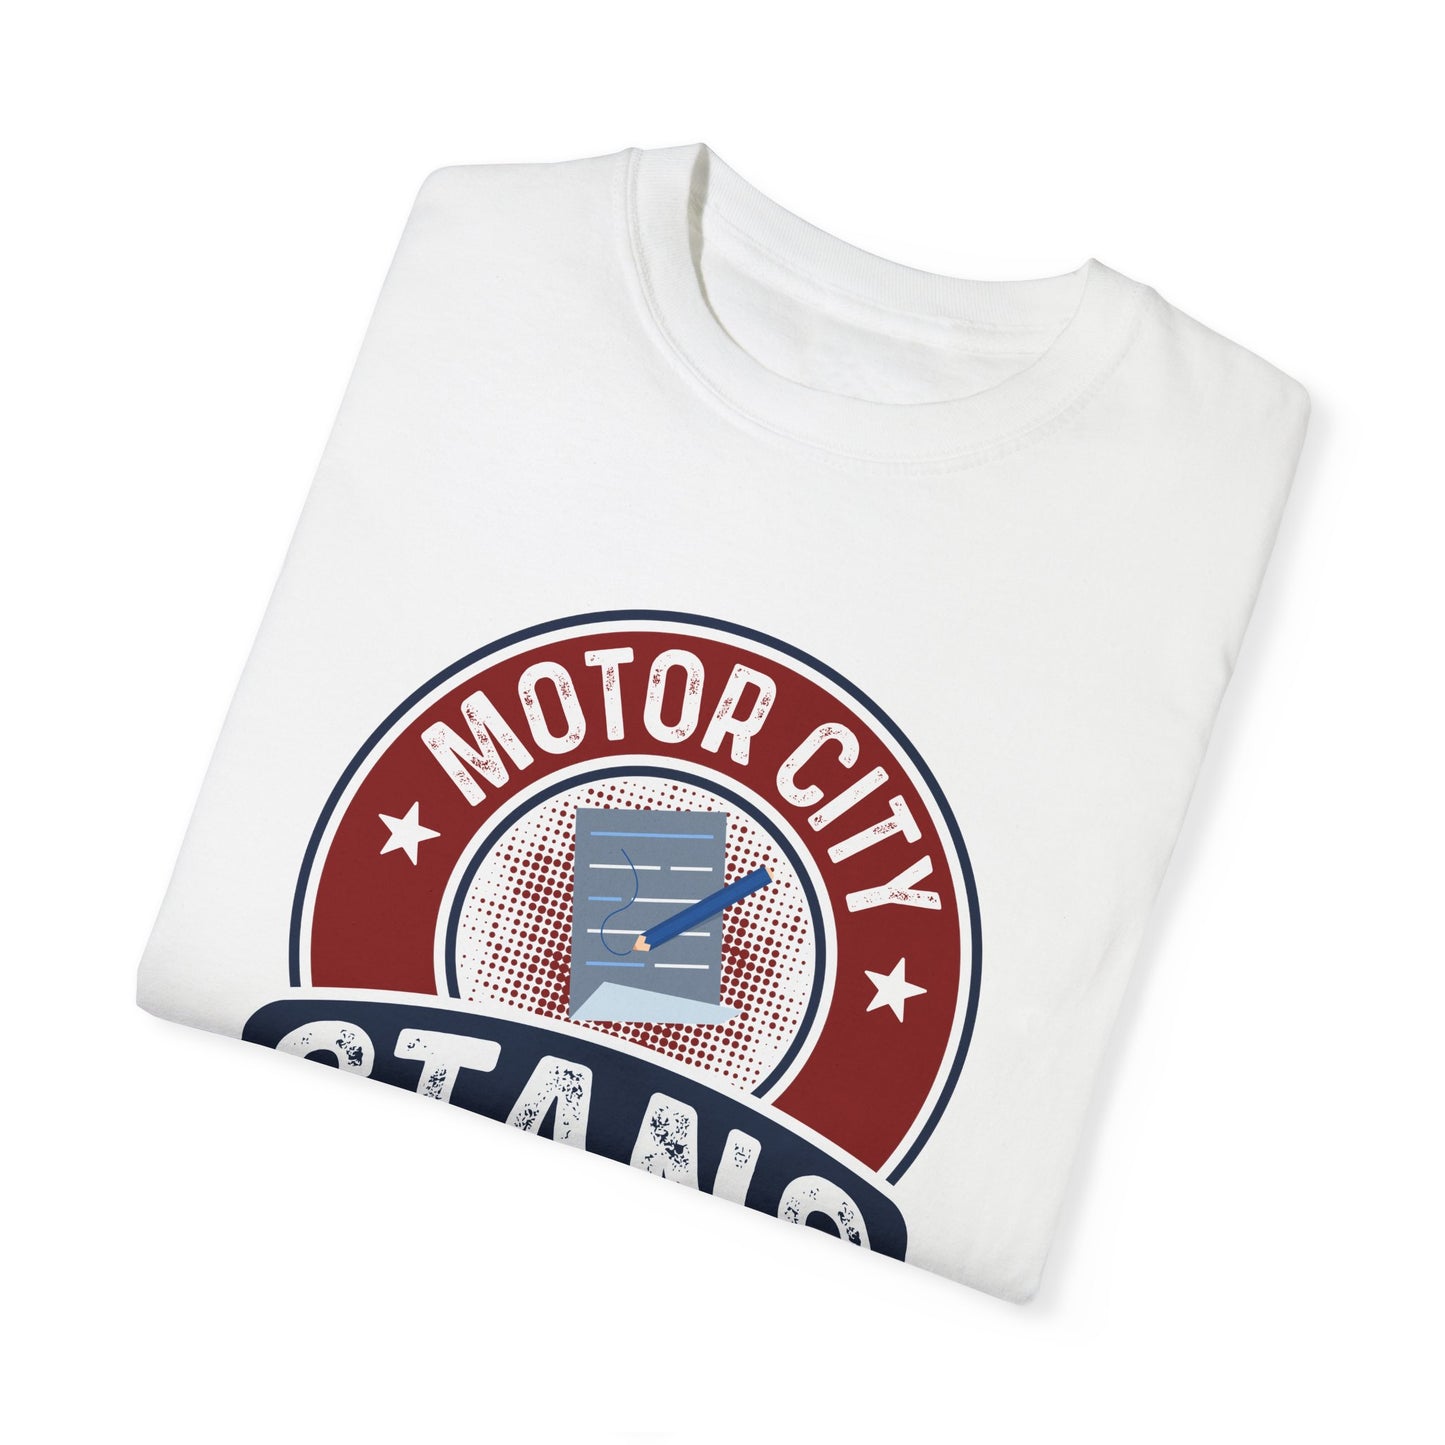 Motor City Stans T-shirt